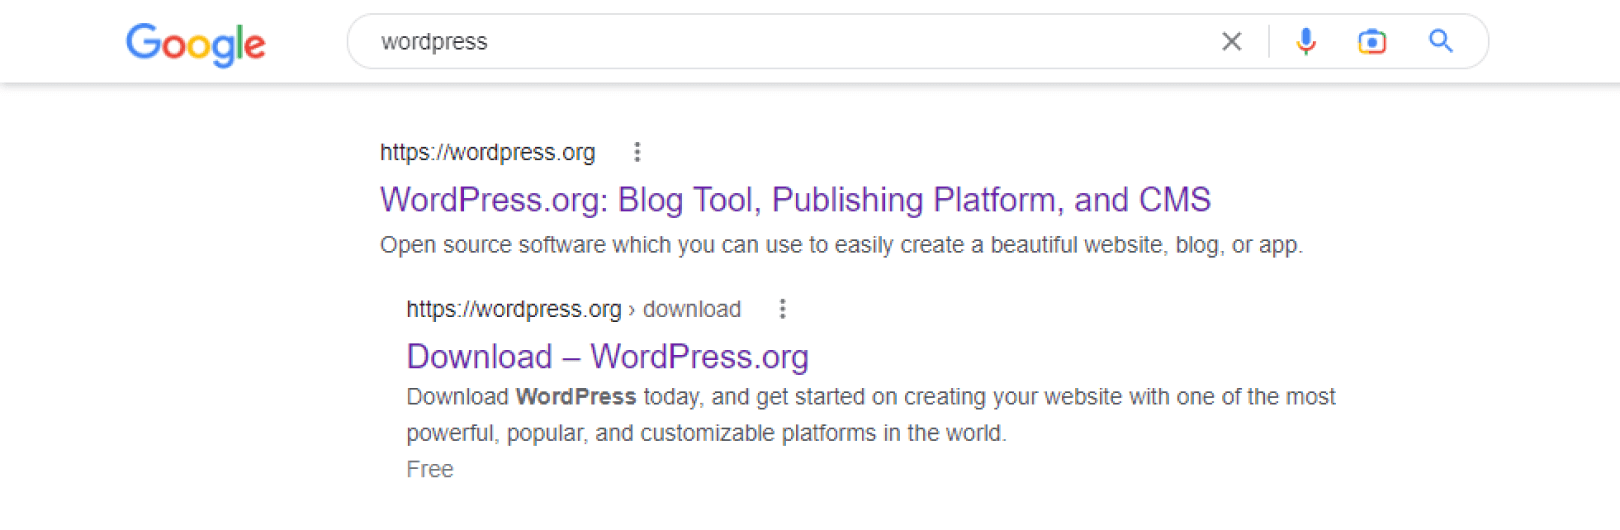 Blog Tool, Publishing Platform, and CMS –